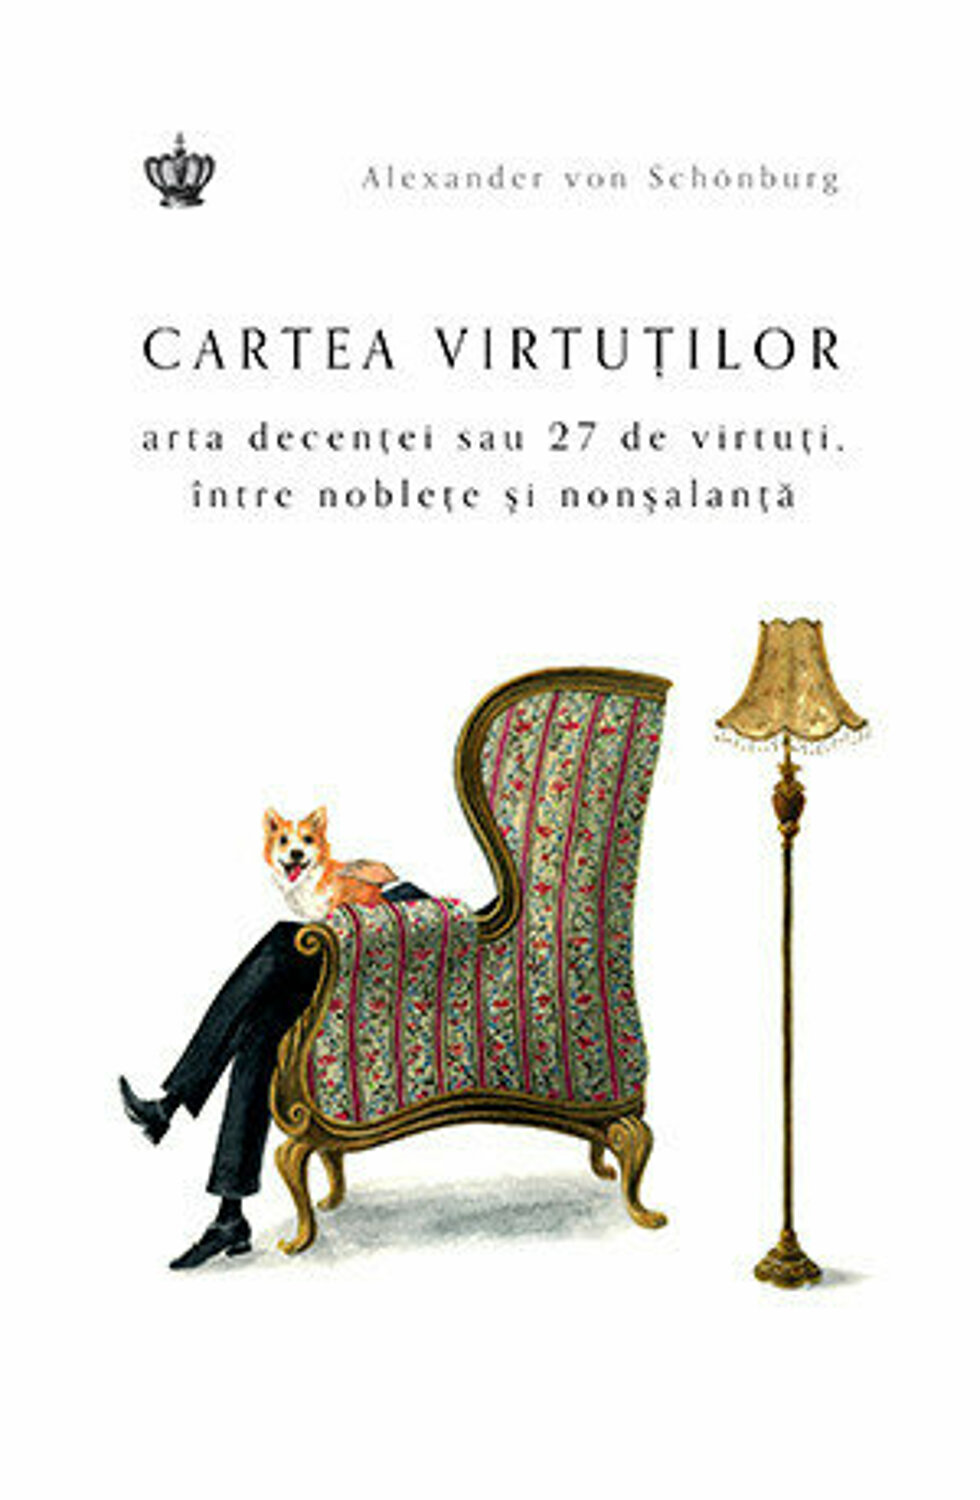 Cartea virtutilor | Alexander von Schonburg Baroque Books & Arts poza bestsellers.ro